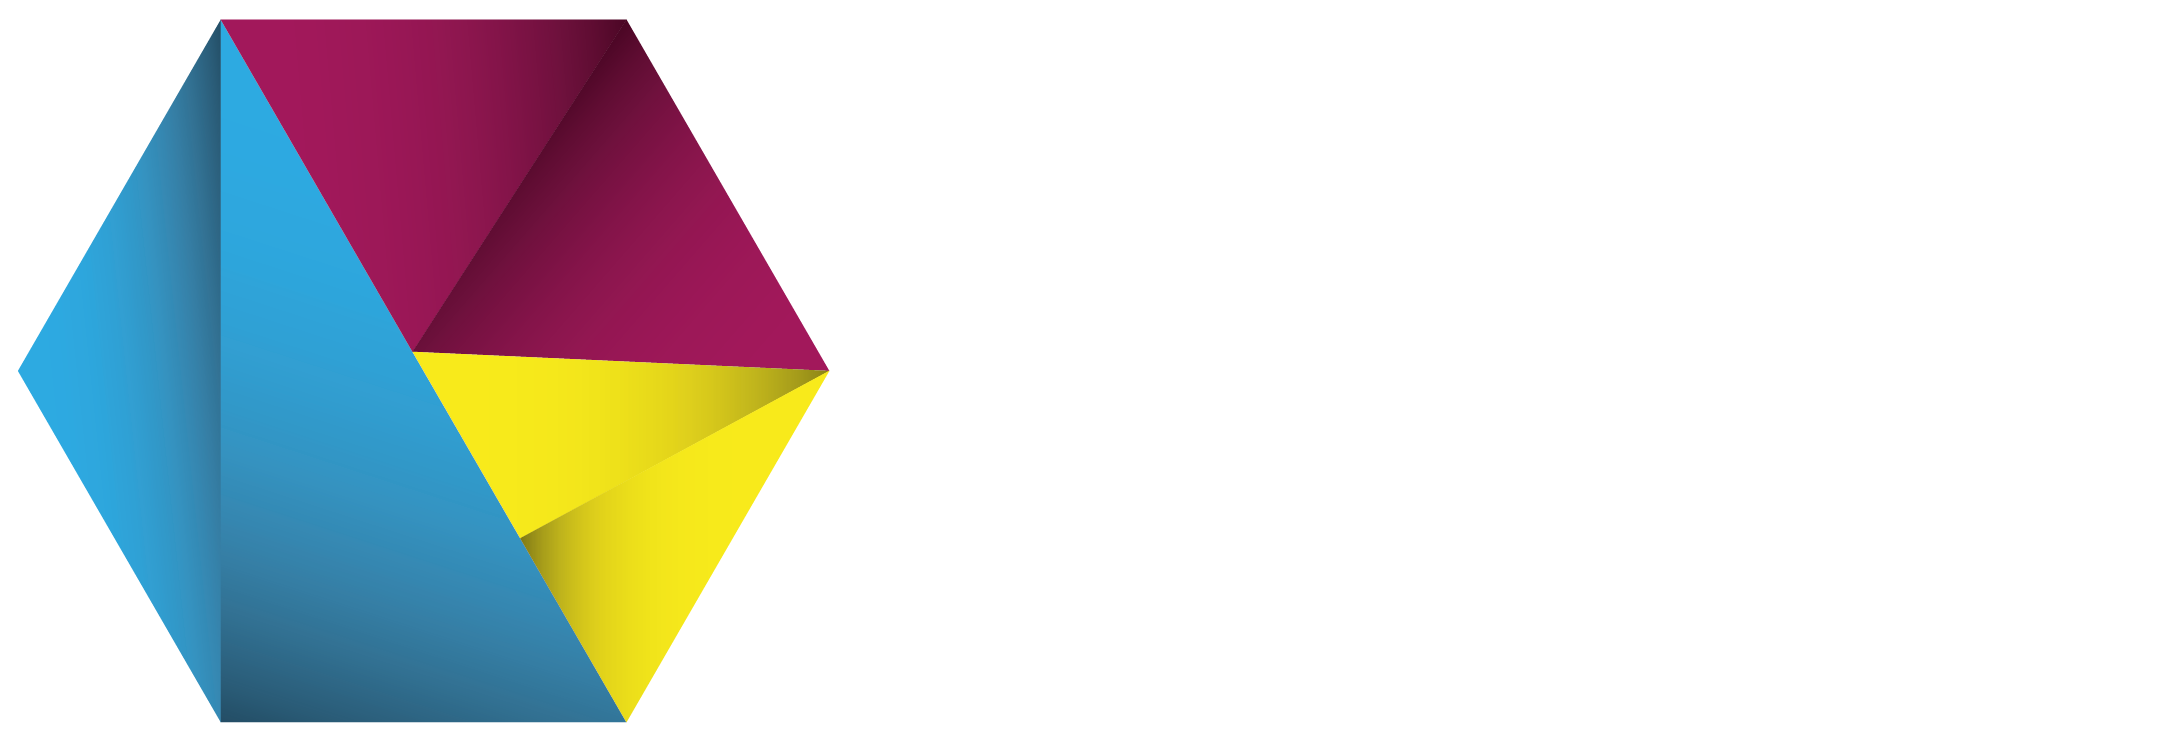 Learning to Shape Birmingham